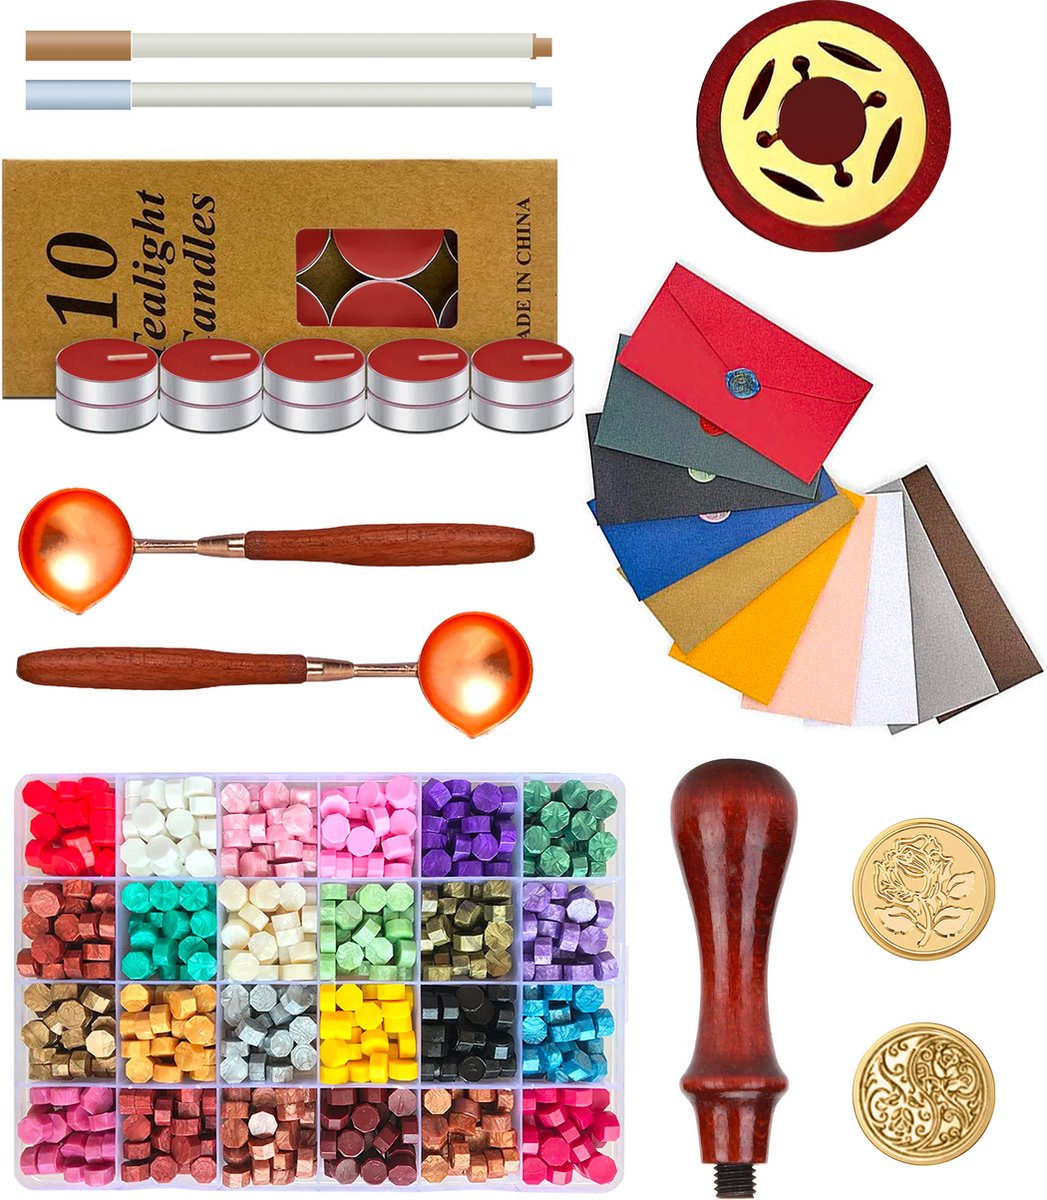 Wax Stempel Set - Wax Zegel Set - Zegellak - Sealing Wax - Wax Seal - Zegel Was - Zegel Stempel - 24 kleuren